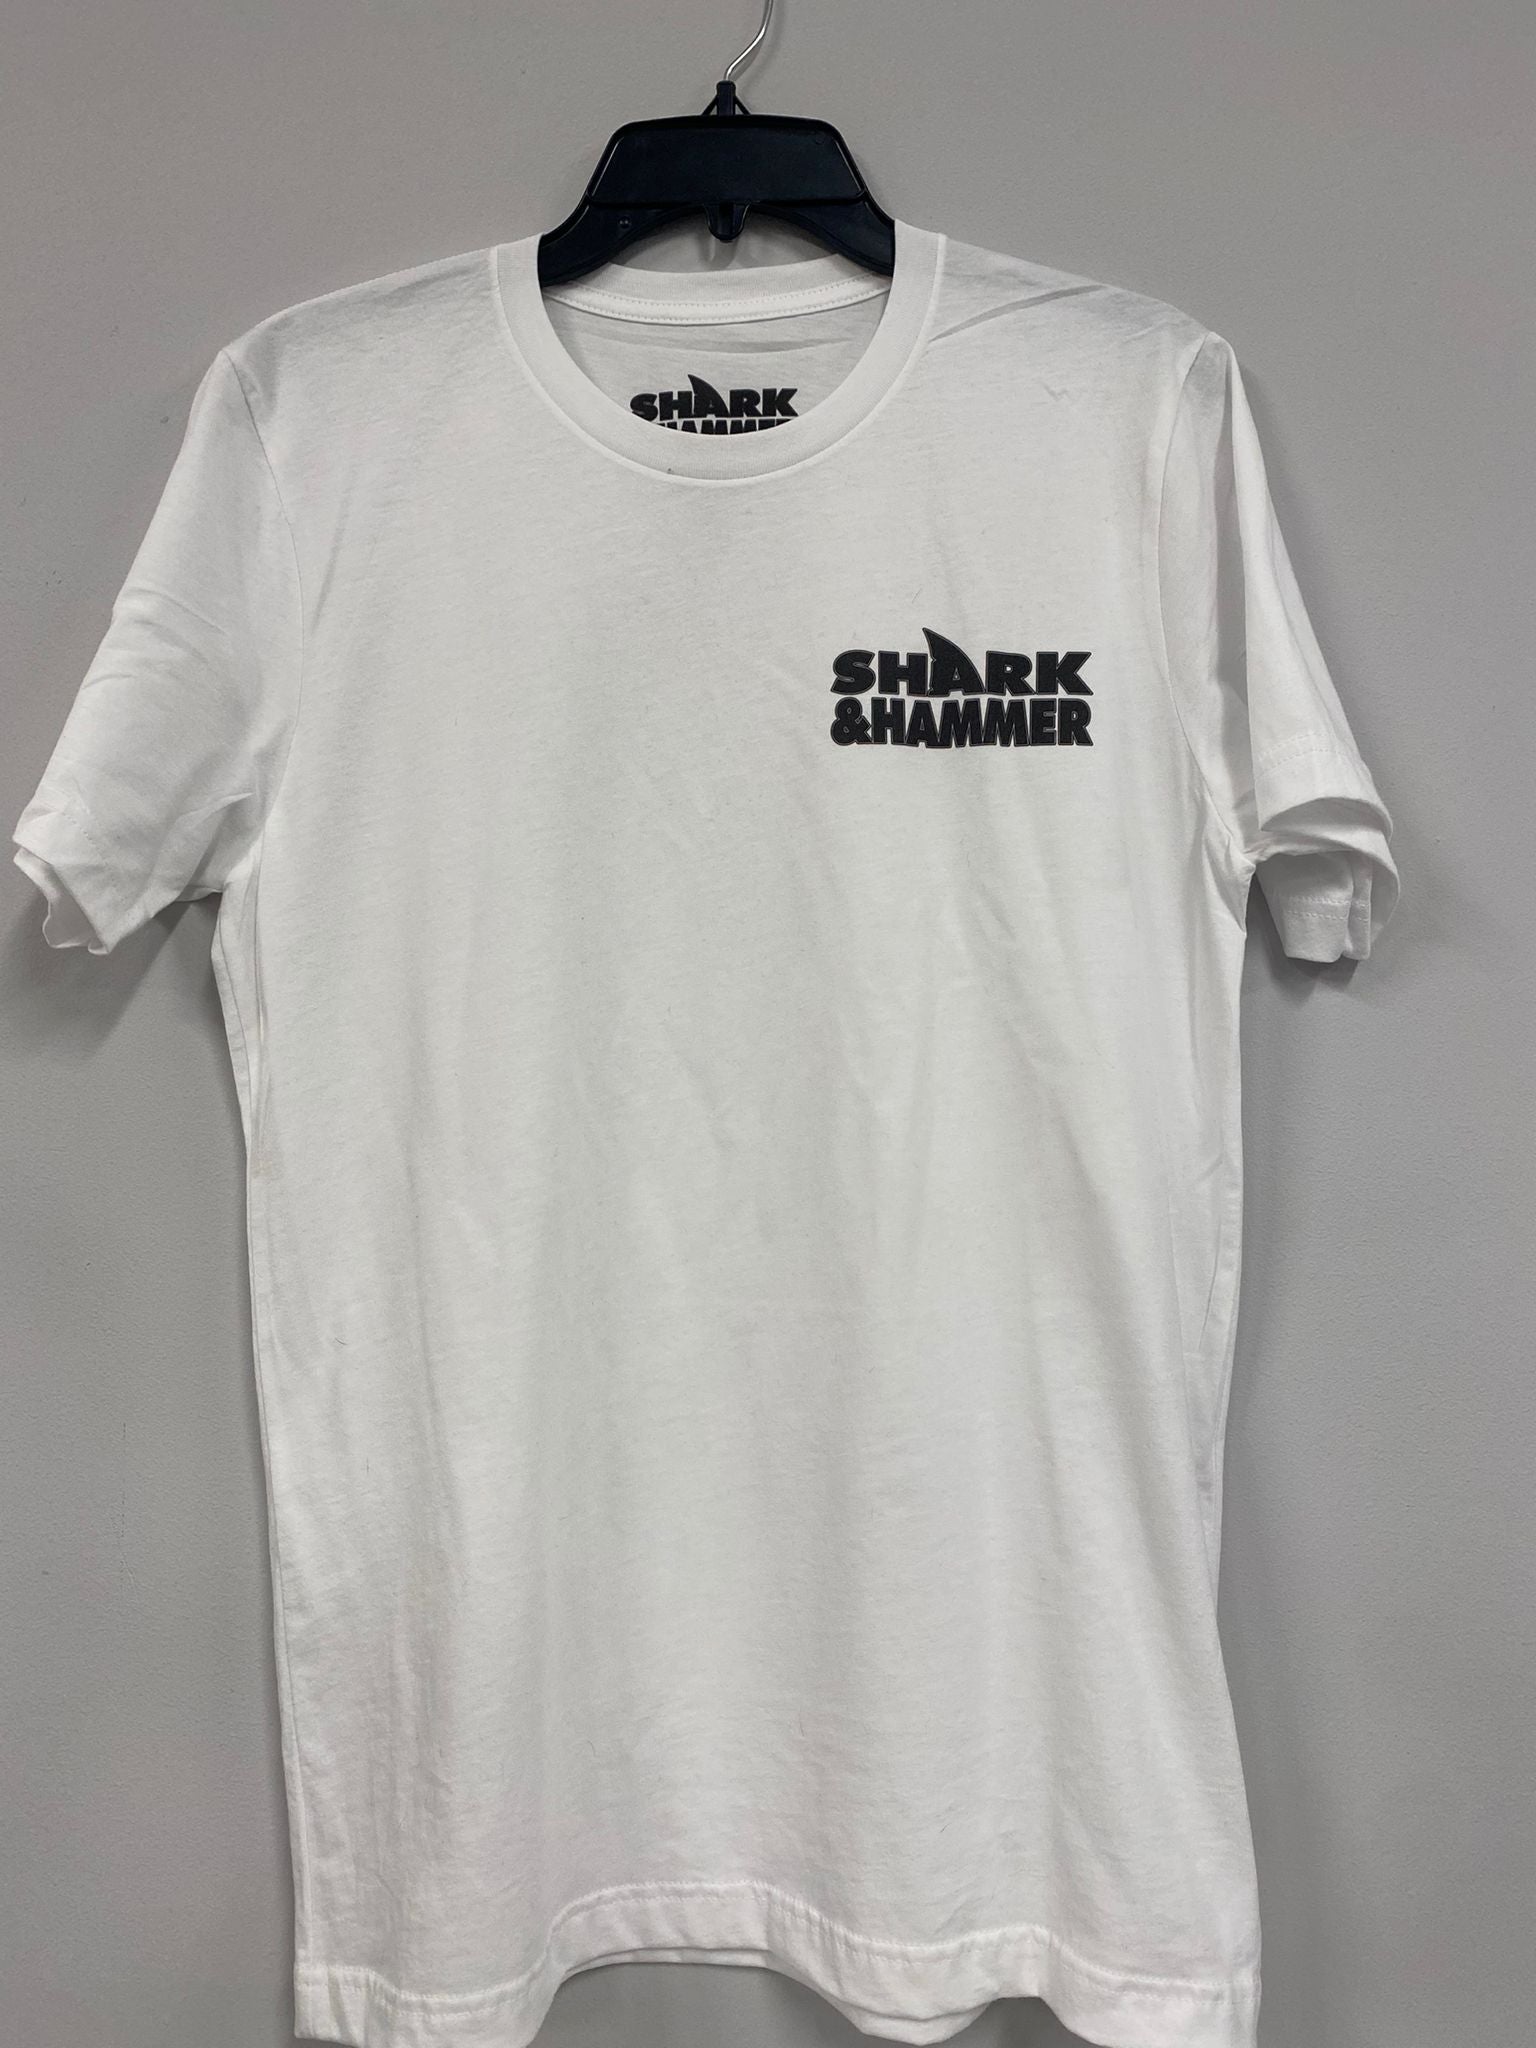 Shark & Hammer Branded Shirt